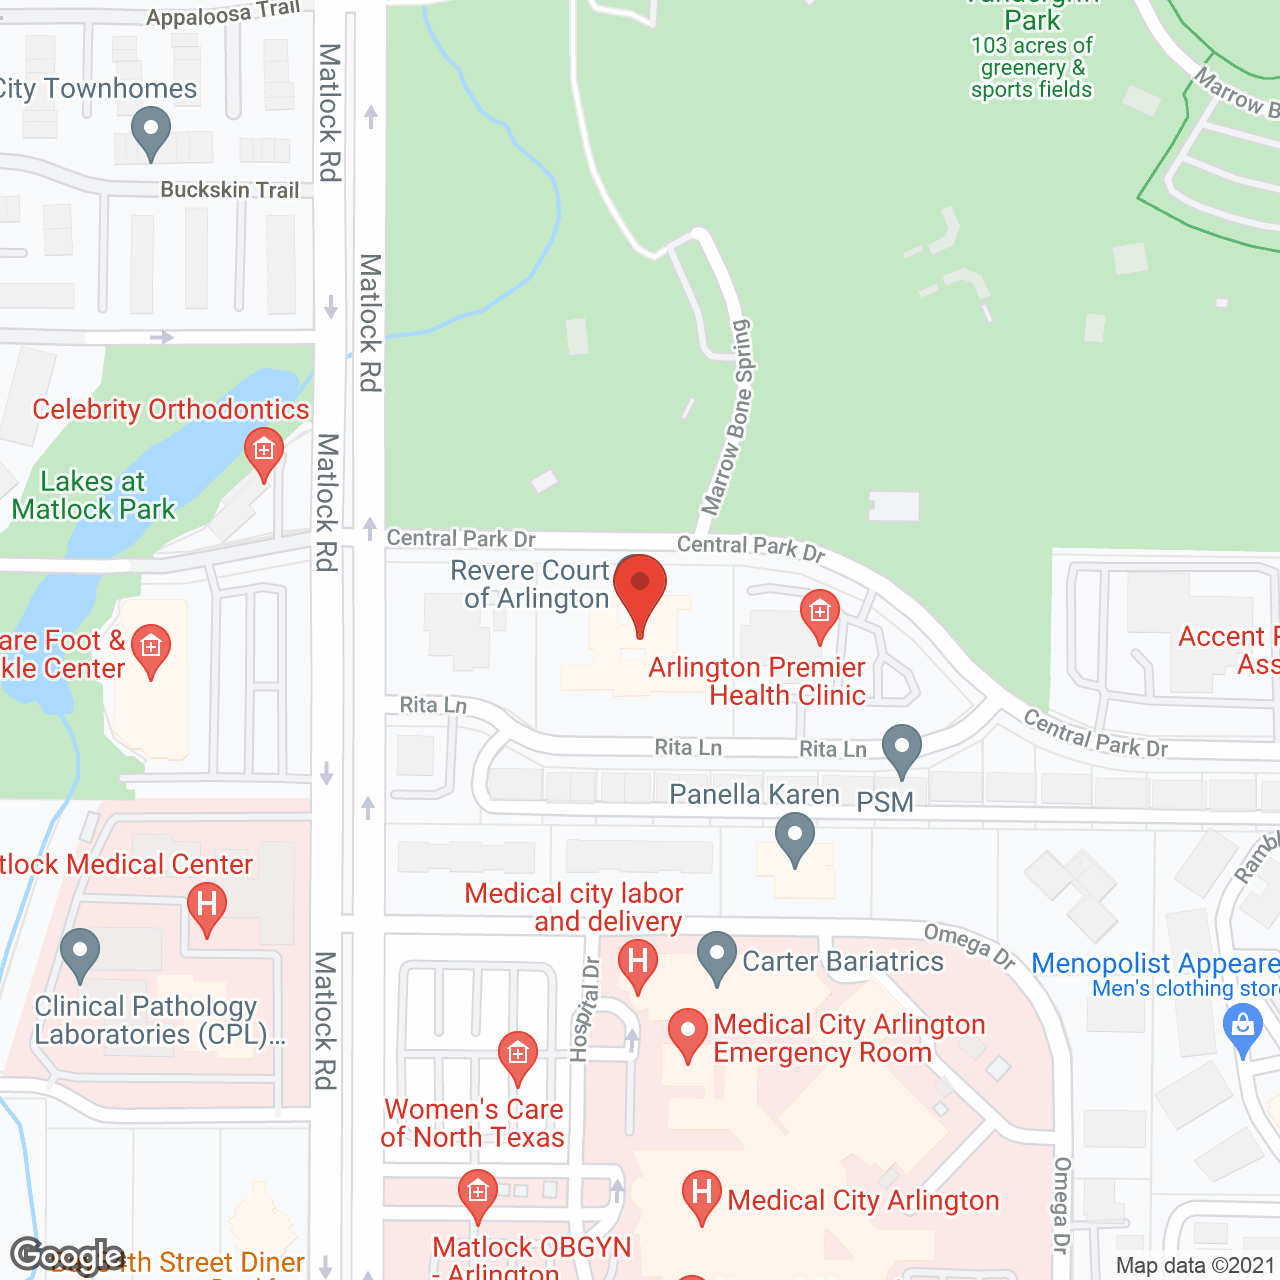 Colonial Oaks at Arlington in google map